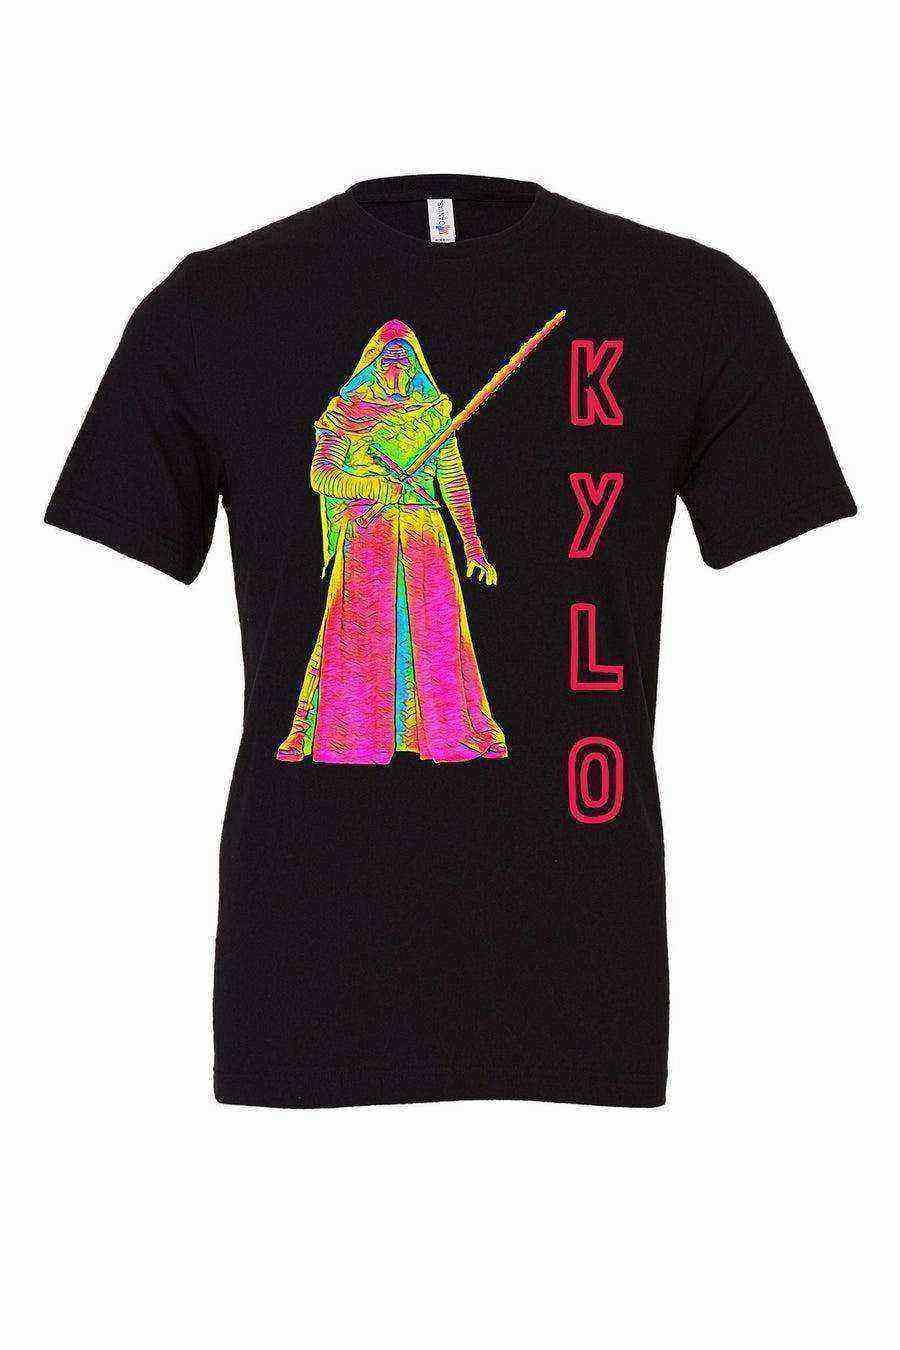 Youth | Kylo Neon Shirt | Star Wars Shirt - Dylan's Tees